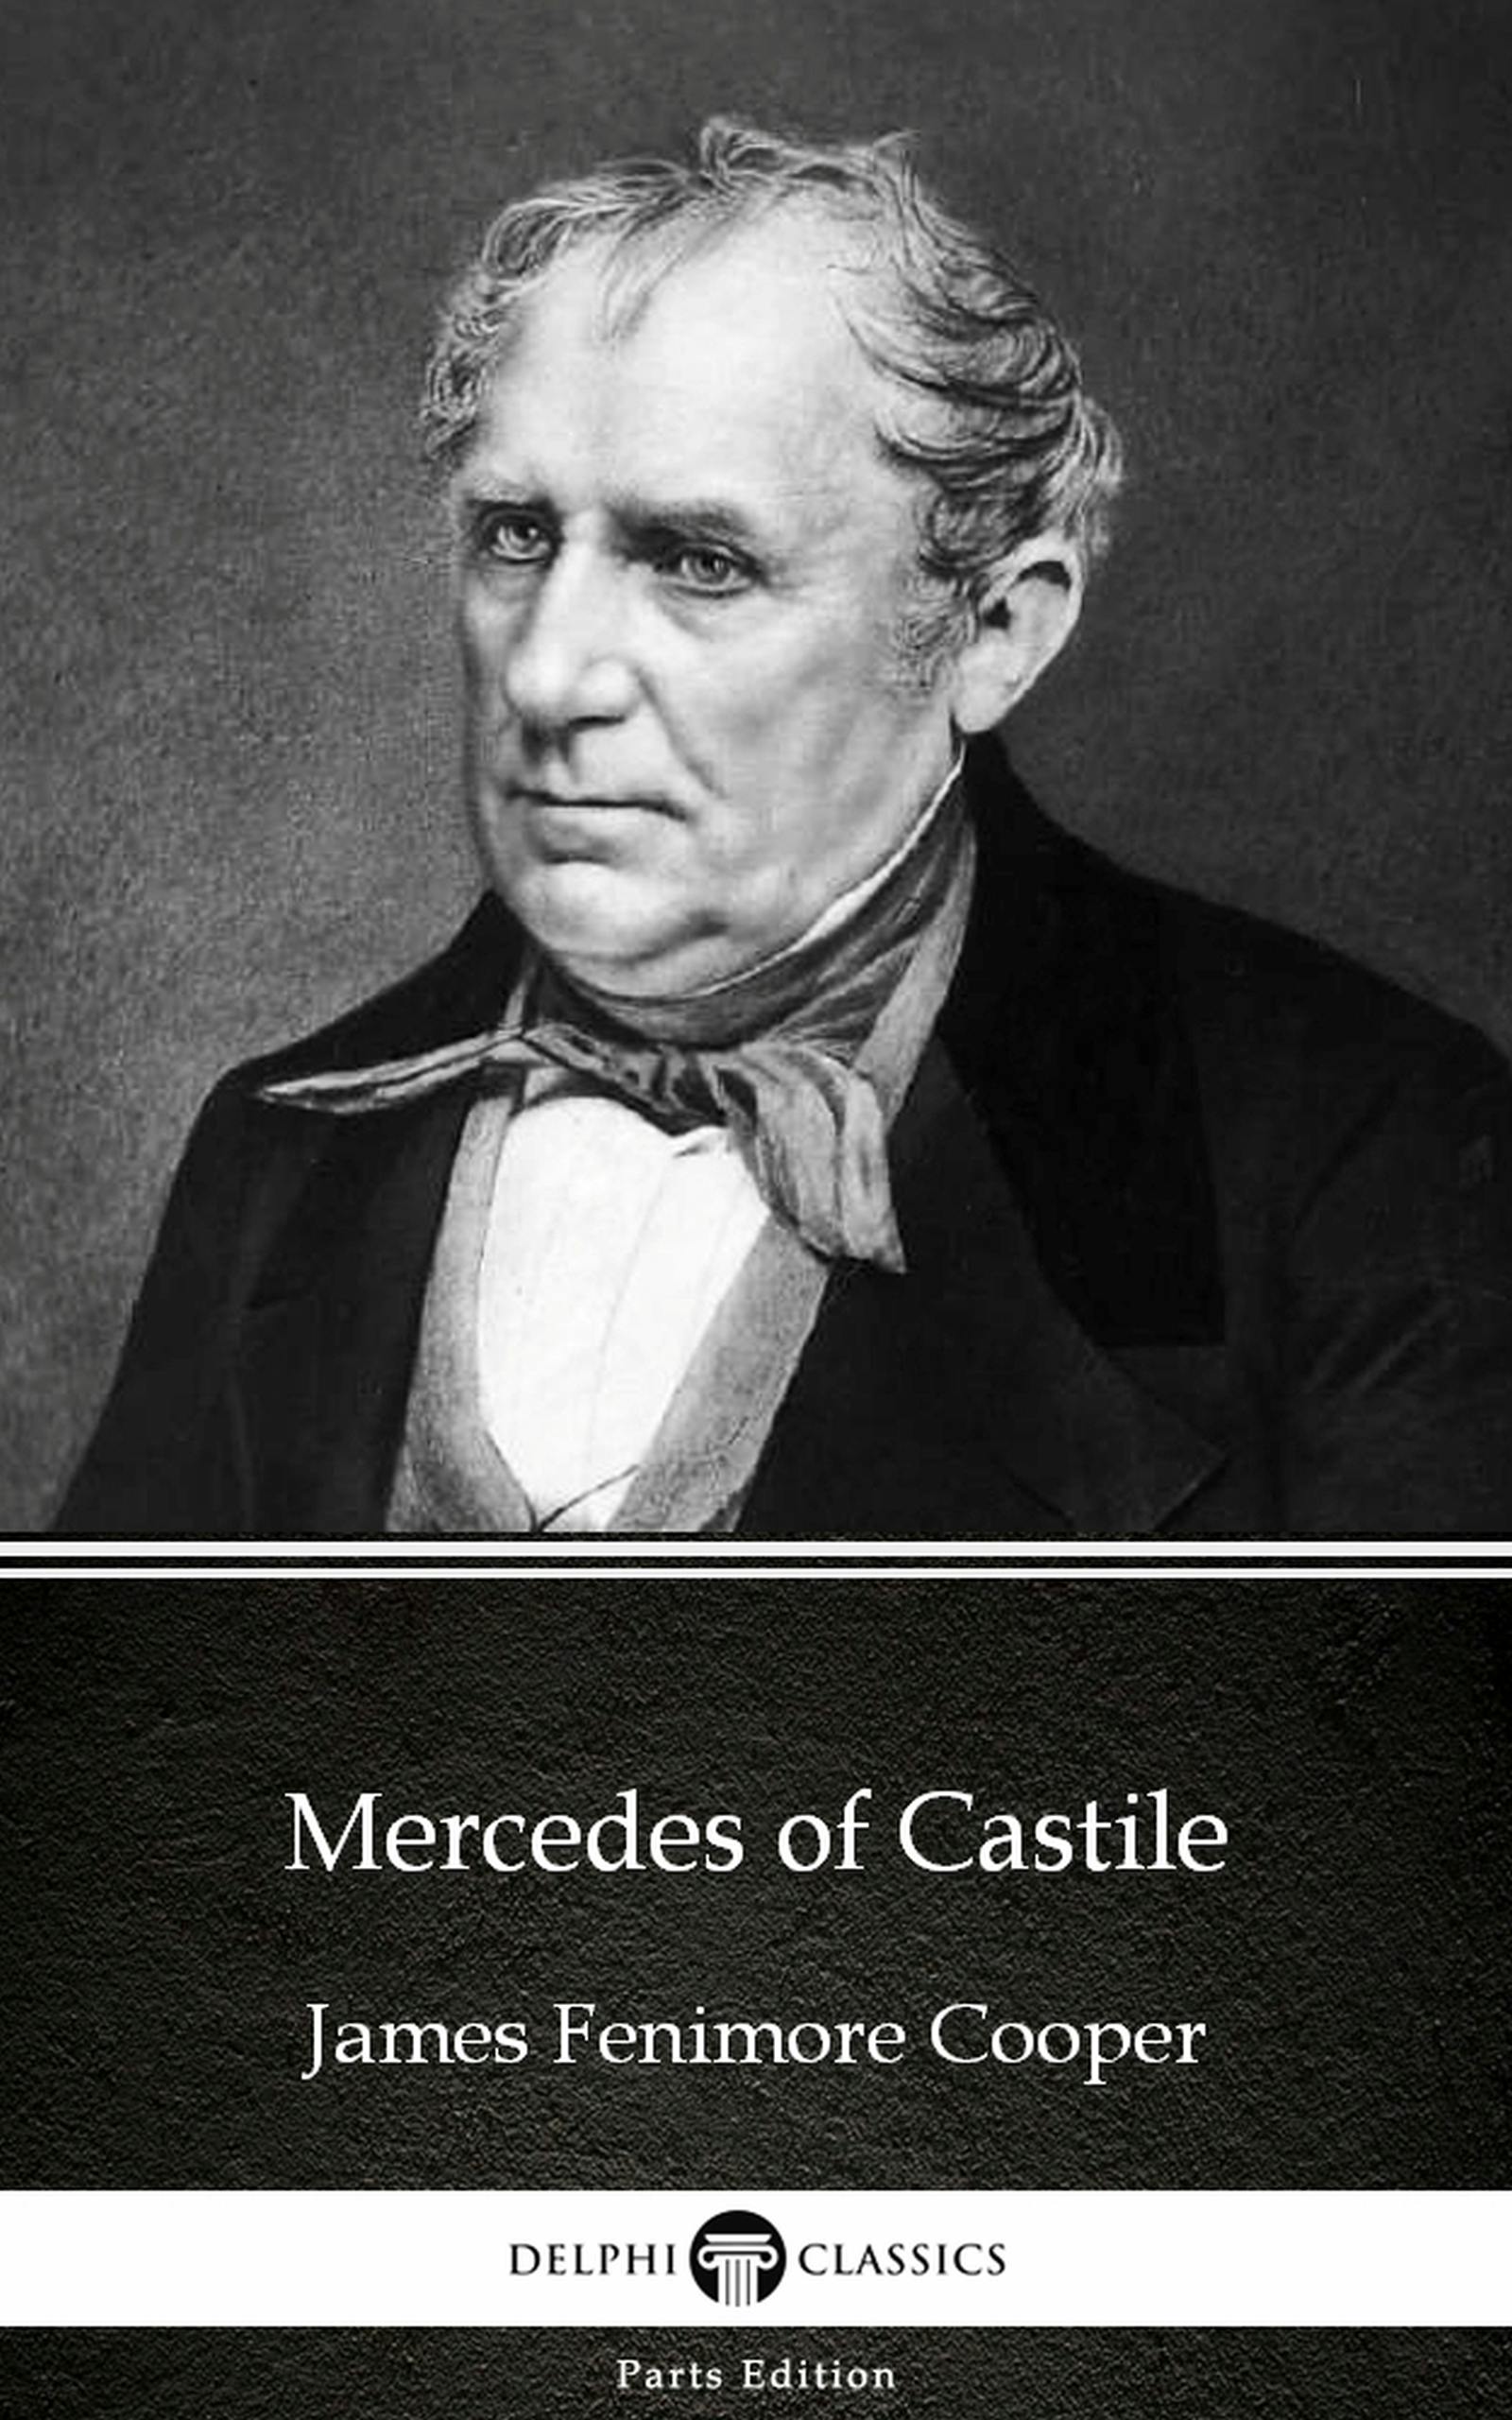 Mercedes of Castile by James Fenimore Cooper - Delphi Classics (Illustrated) - James Fenimore Cooper